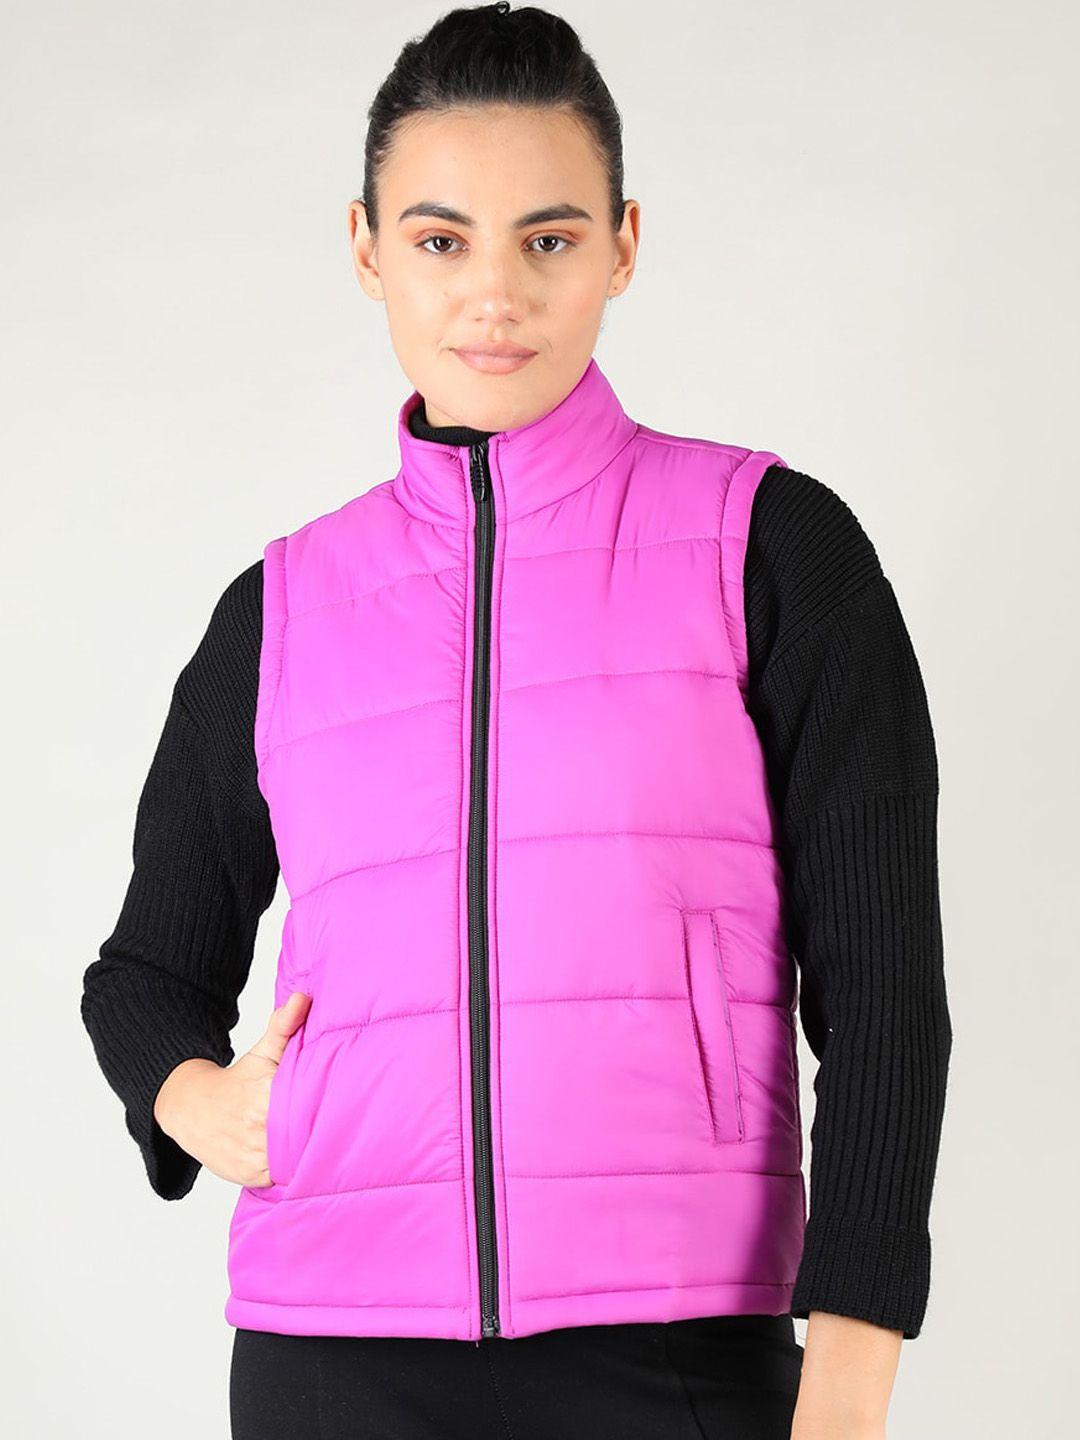 chkokko women fuschia geometric lightweight outdoor padded jacket